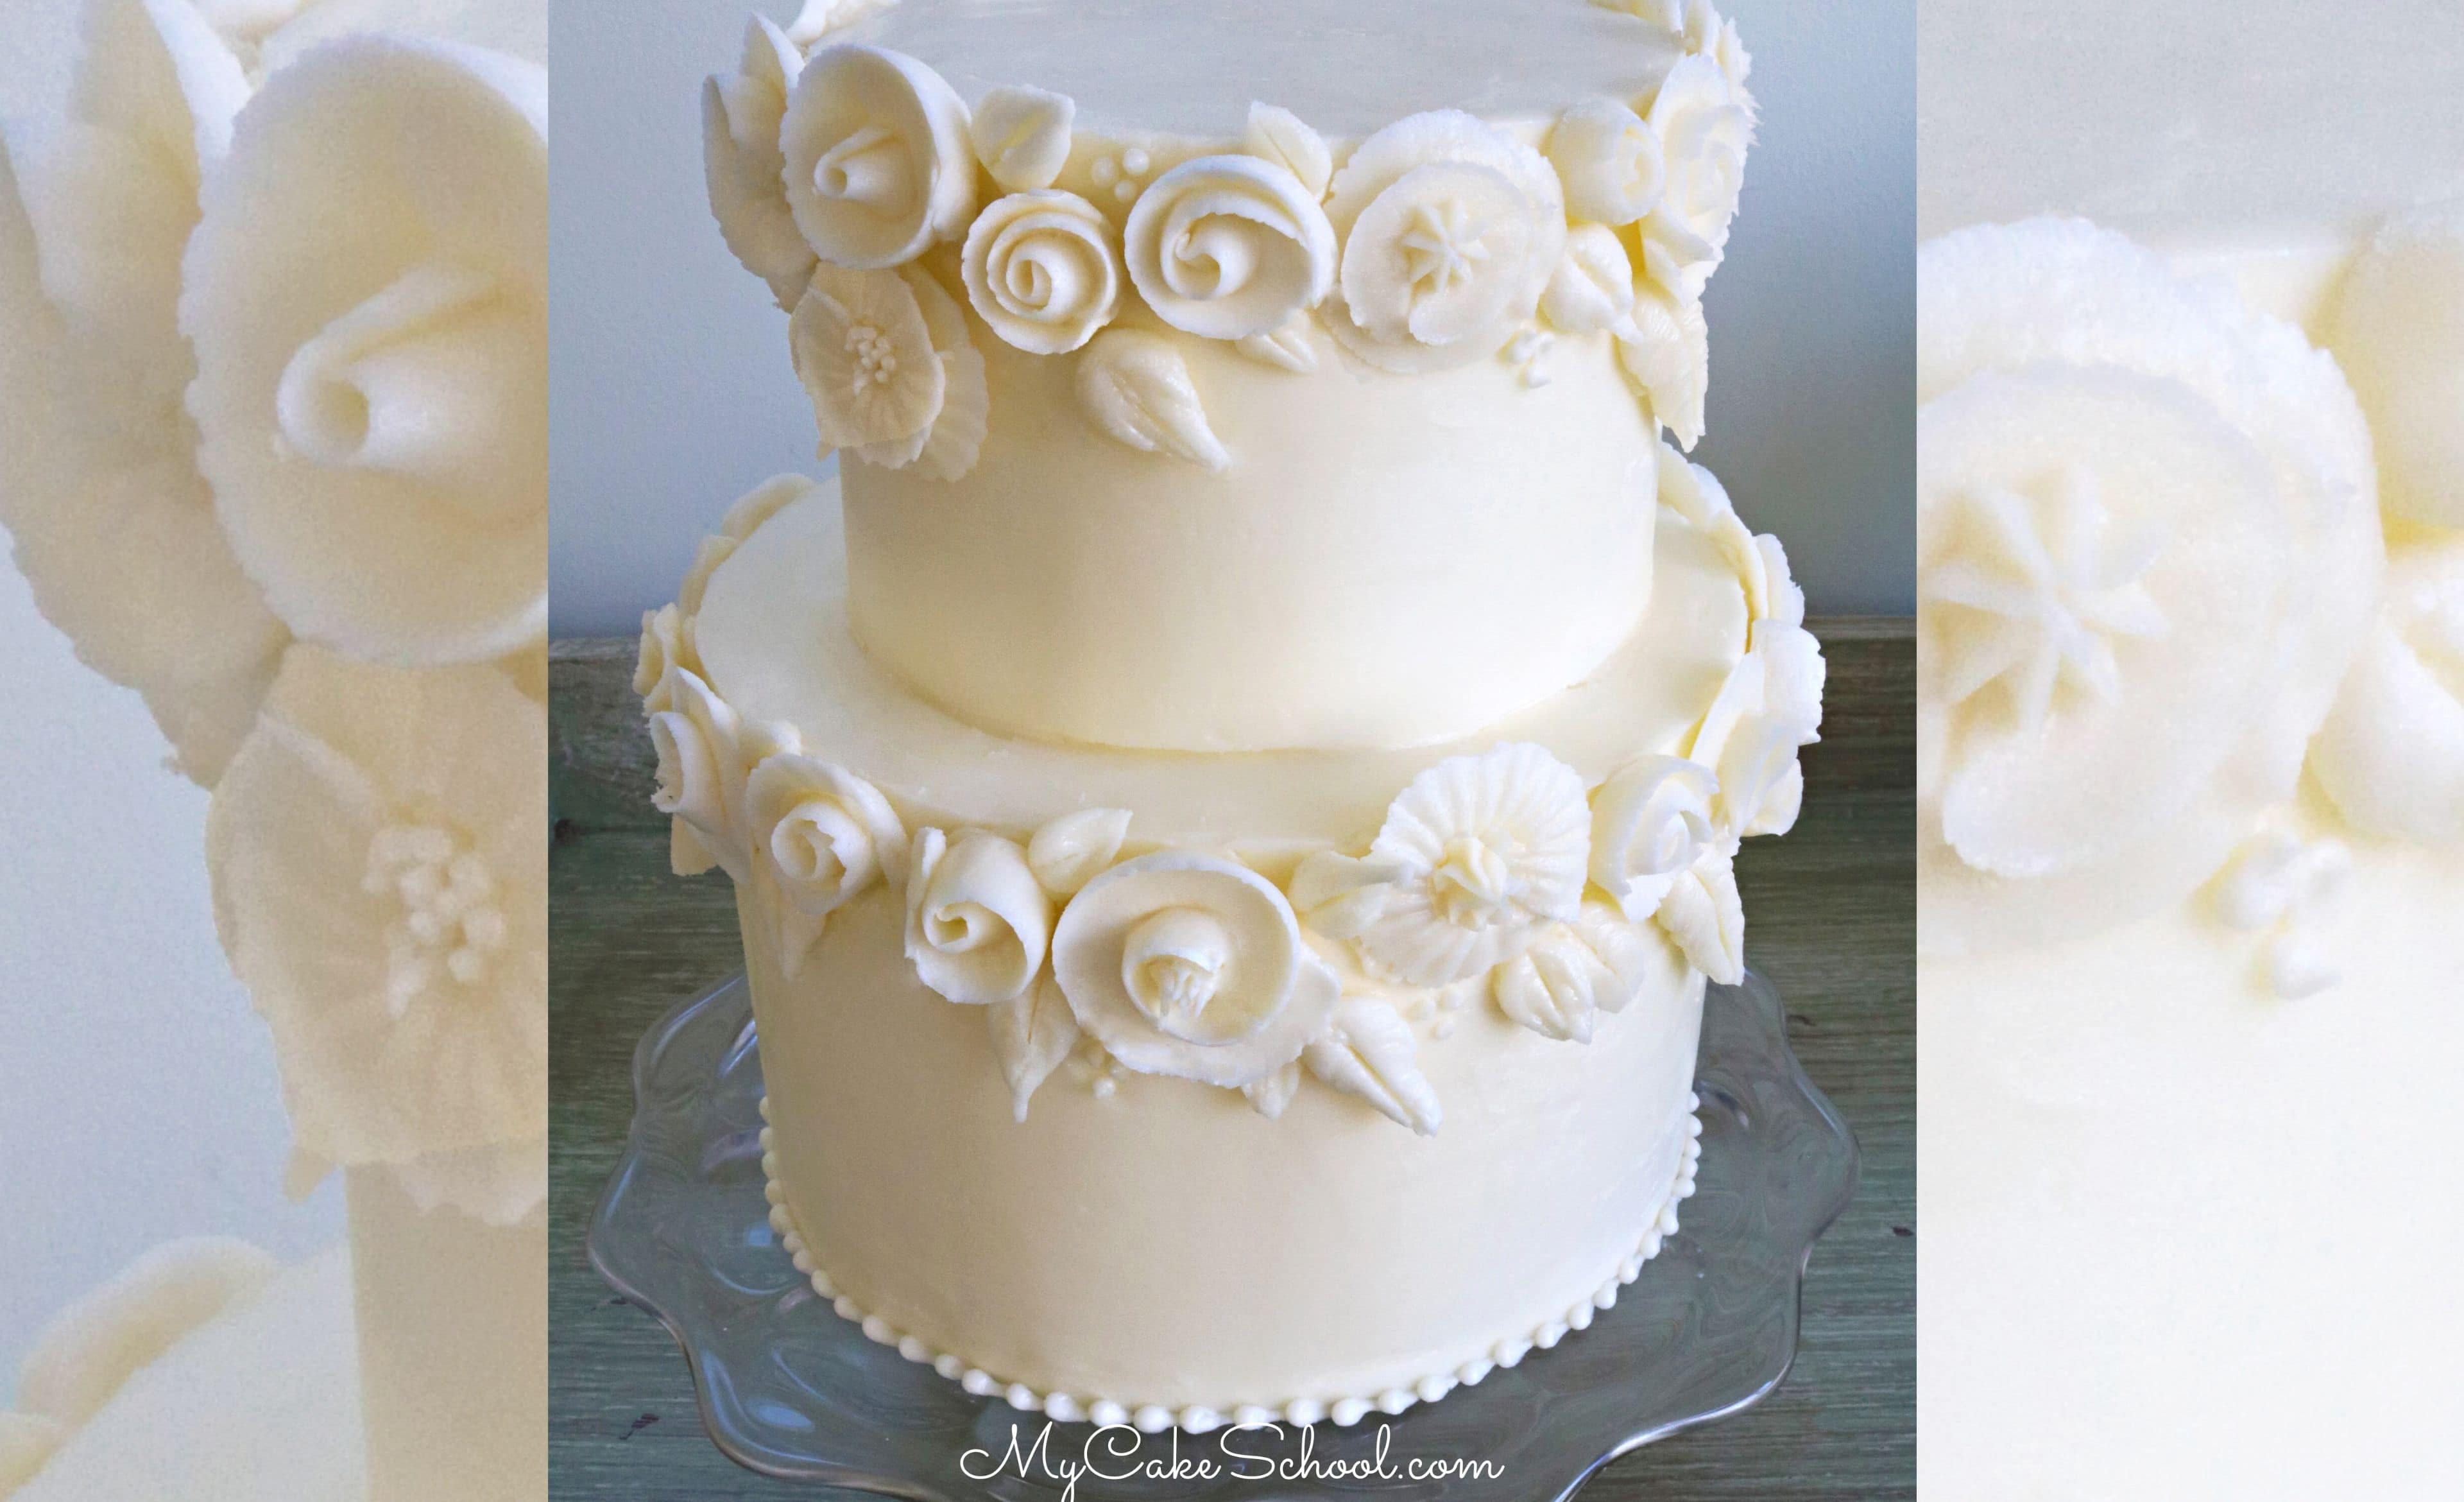 Elegant White Buttercream Flowers- A Cake Decorating Video Tutorial by MyCakeSchool.com!